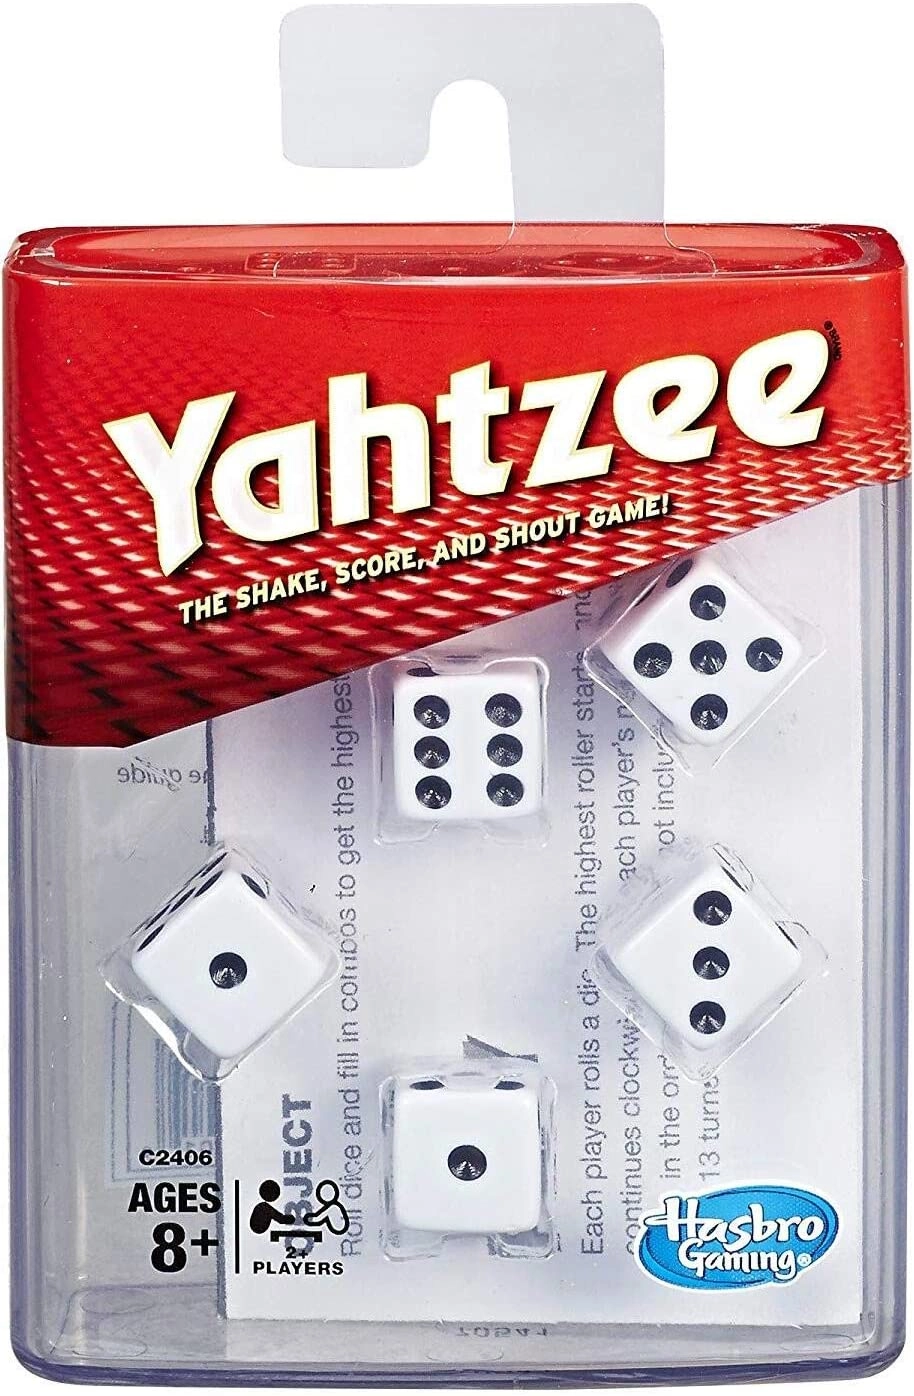 2017 Yahtzee Box